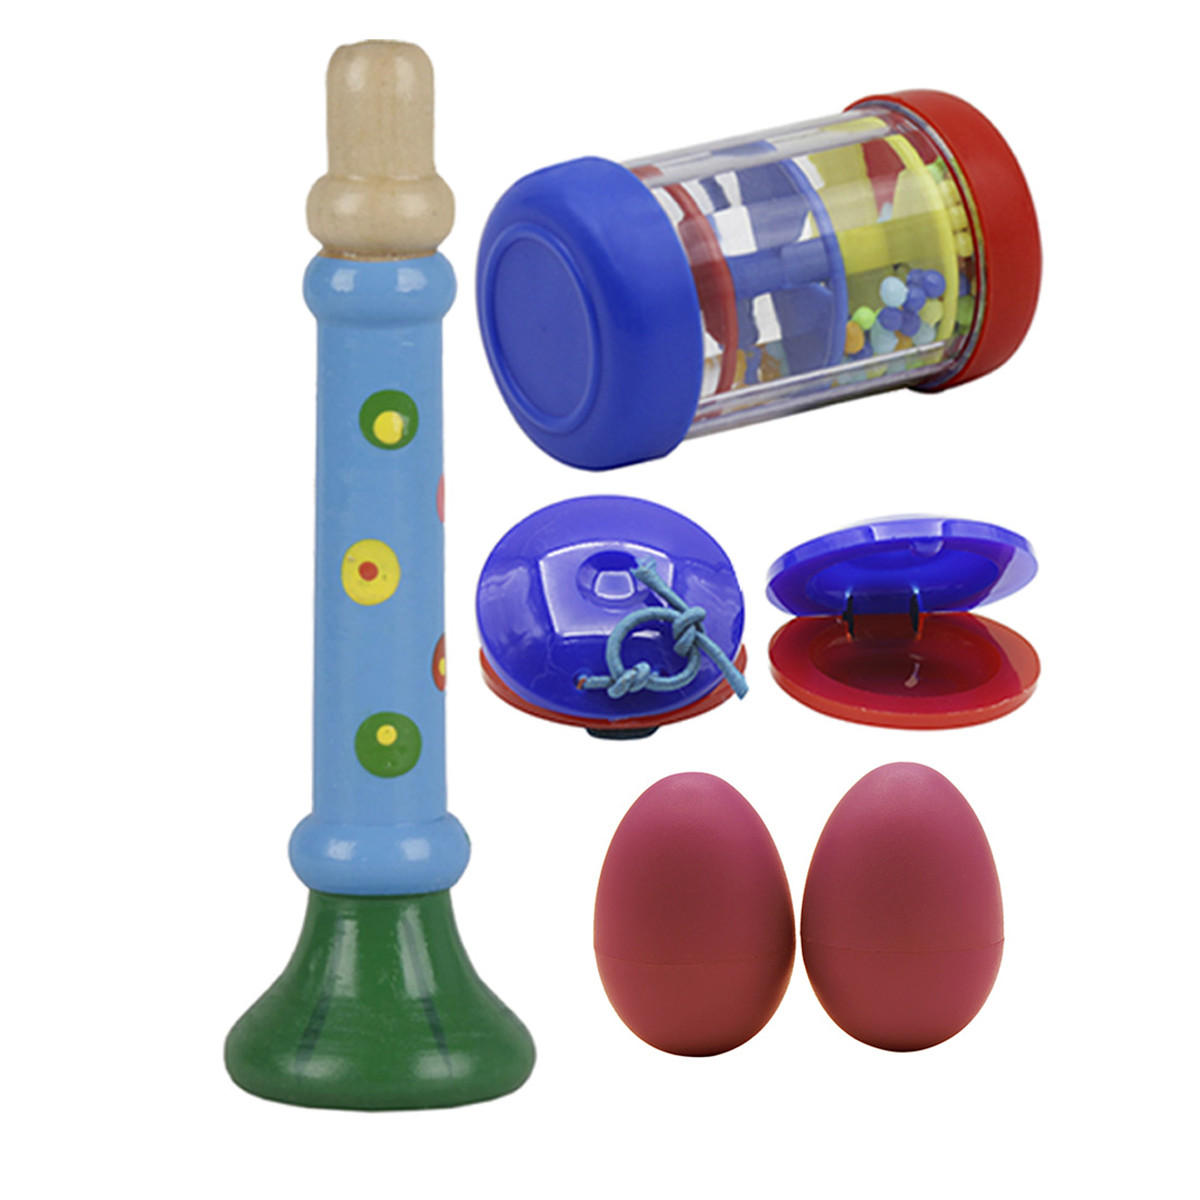 4-delige set Orff muziekinstrumenten zand eieren / regenring / kleine hoorn / plastic castagnetten v